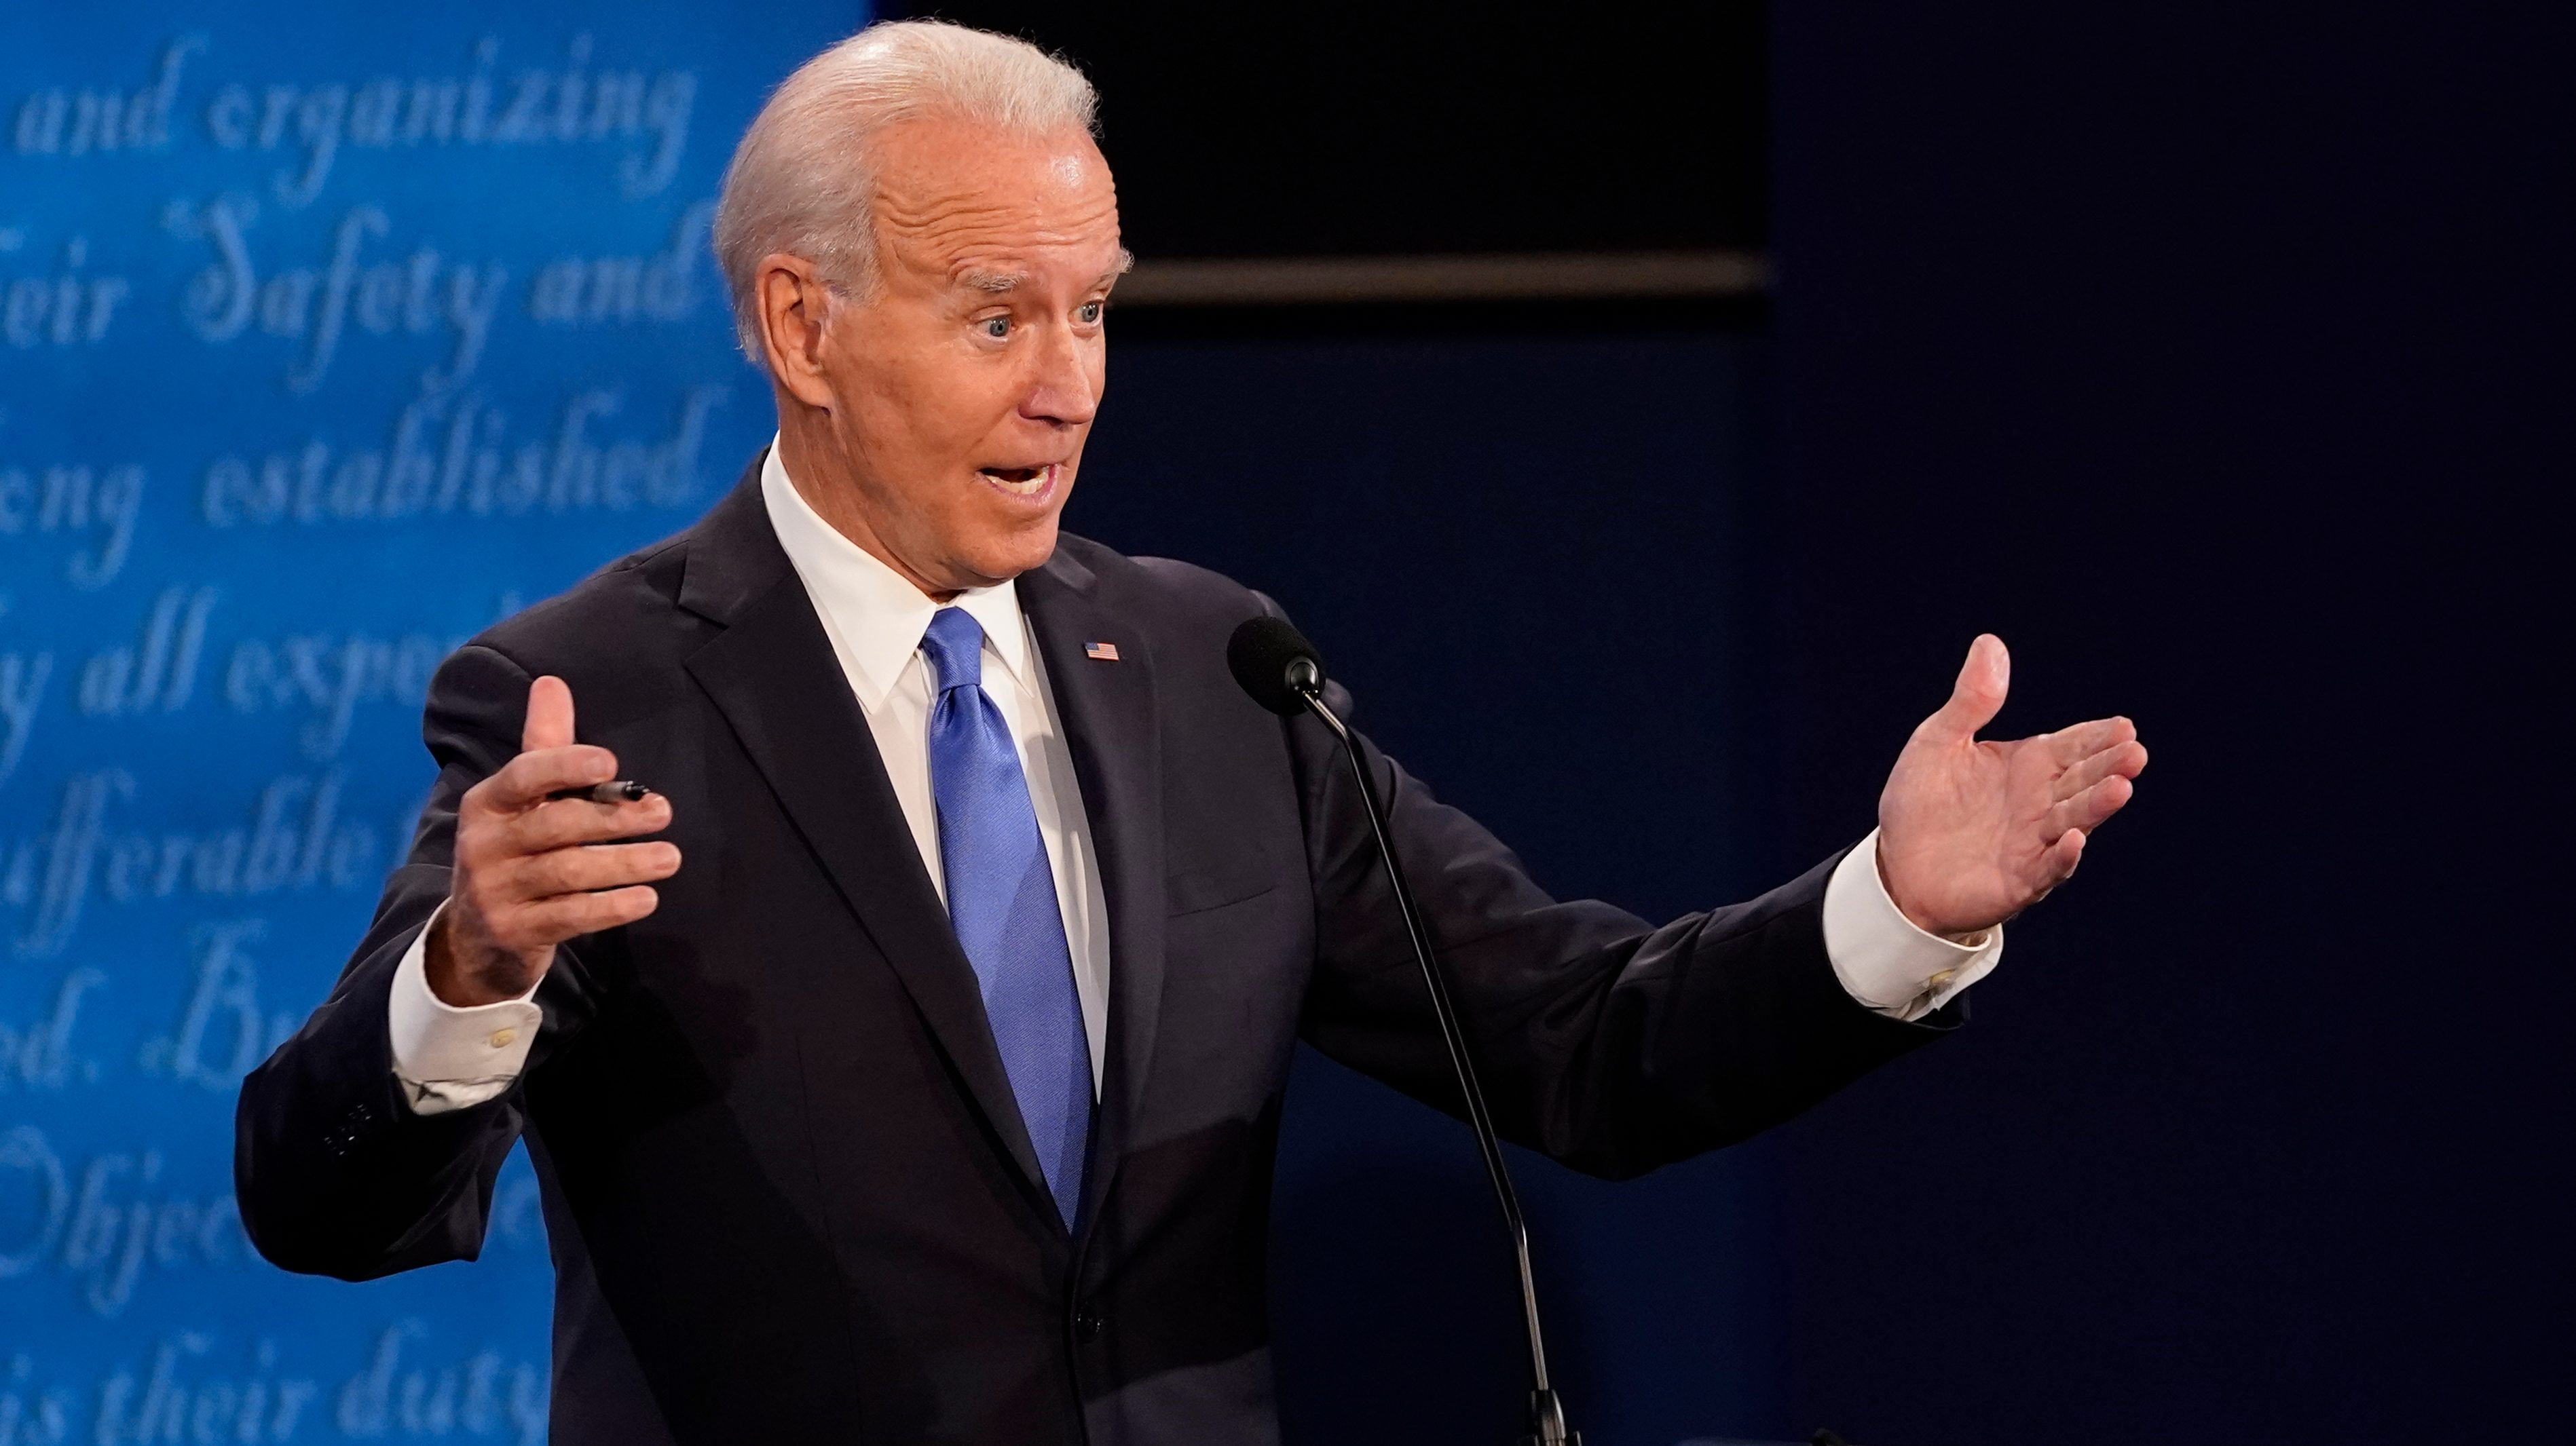 Joe Biden second presidential debate